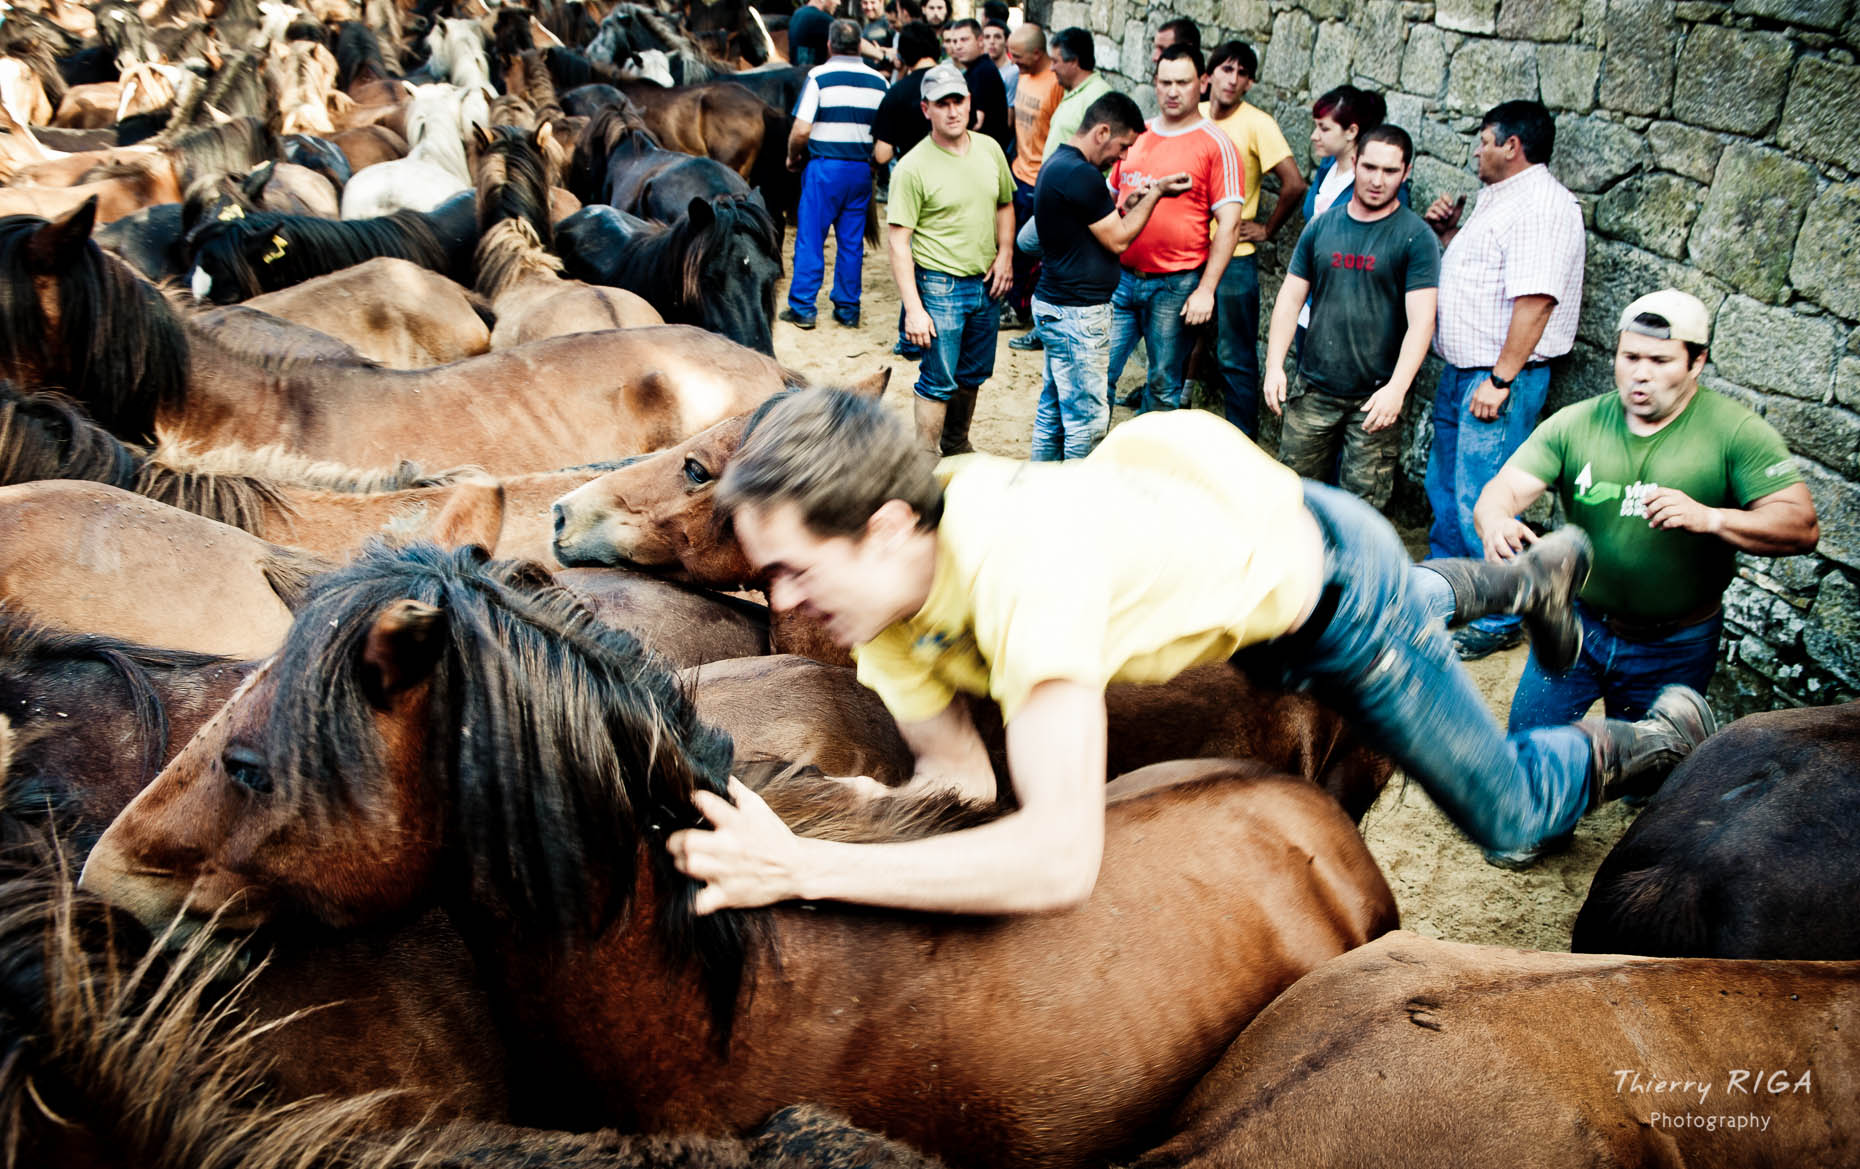 jumping onto the wild horses, Rapa das Bestas, Sabucedo, Spain